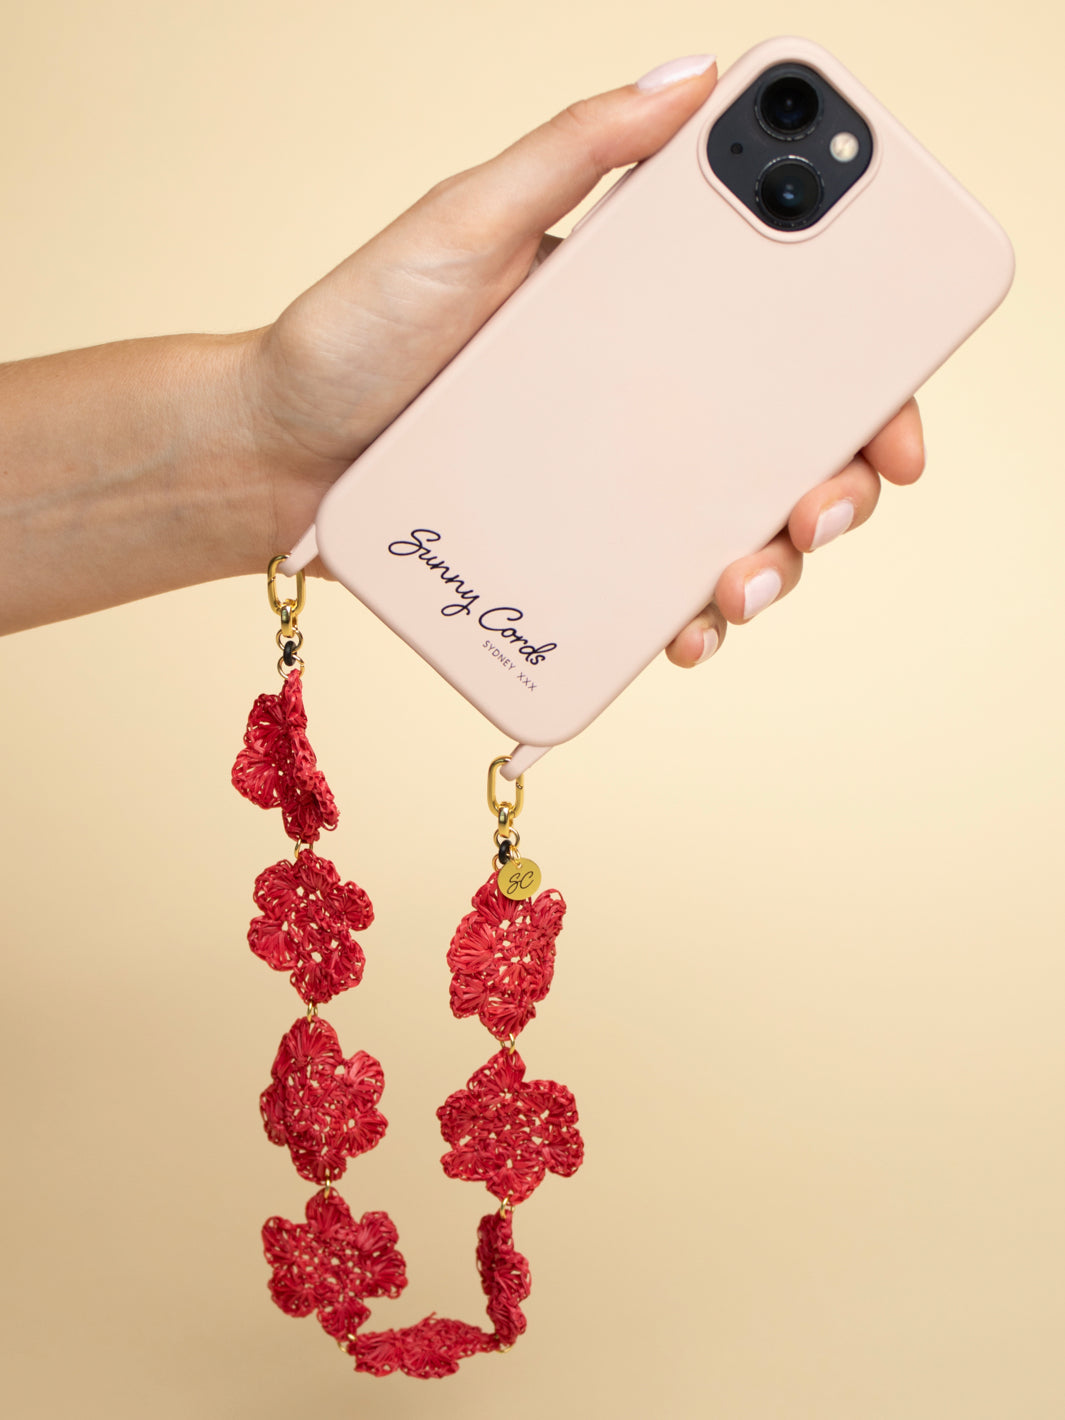 Phone Strap short raspberry & Phone Case | Sunnycords®